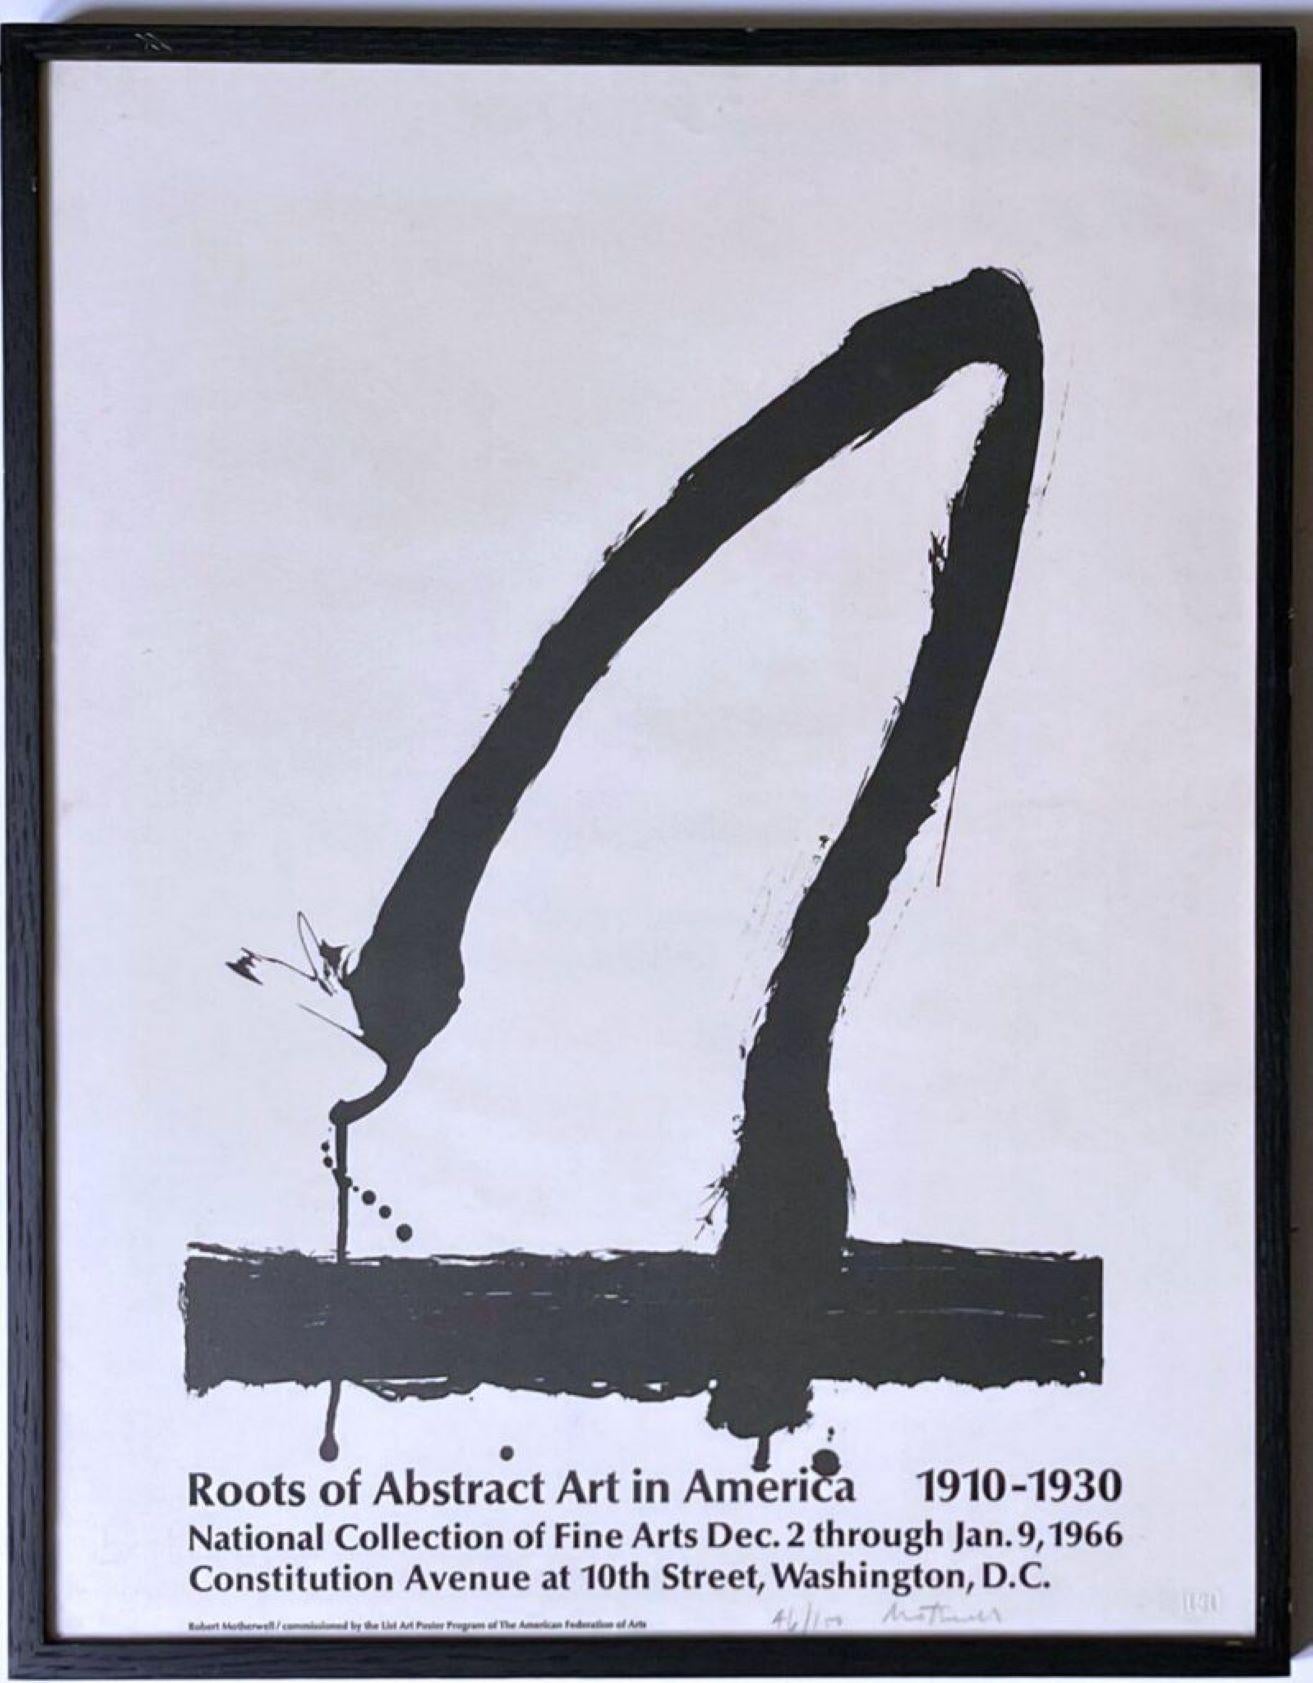 Robert Motherwell Abstract Print – The Roots of Abstract Art in America, von VIP handsignierter Druck in limitierter Auflage